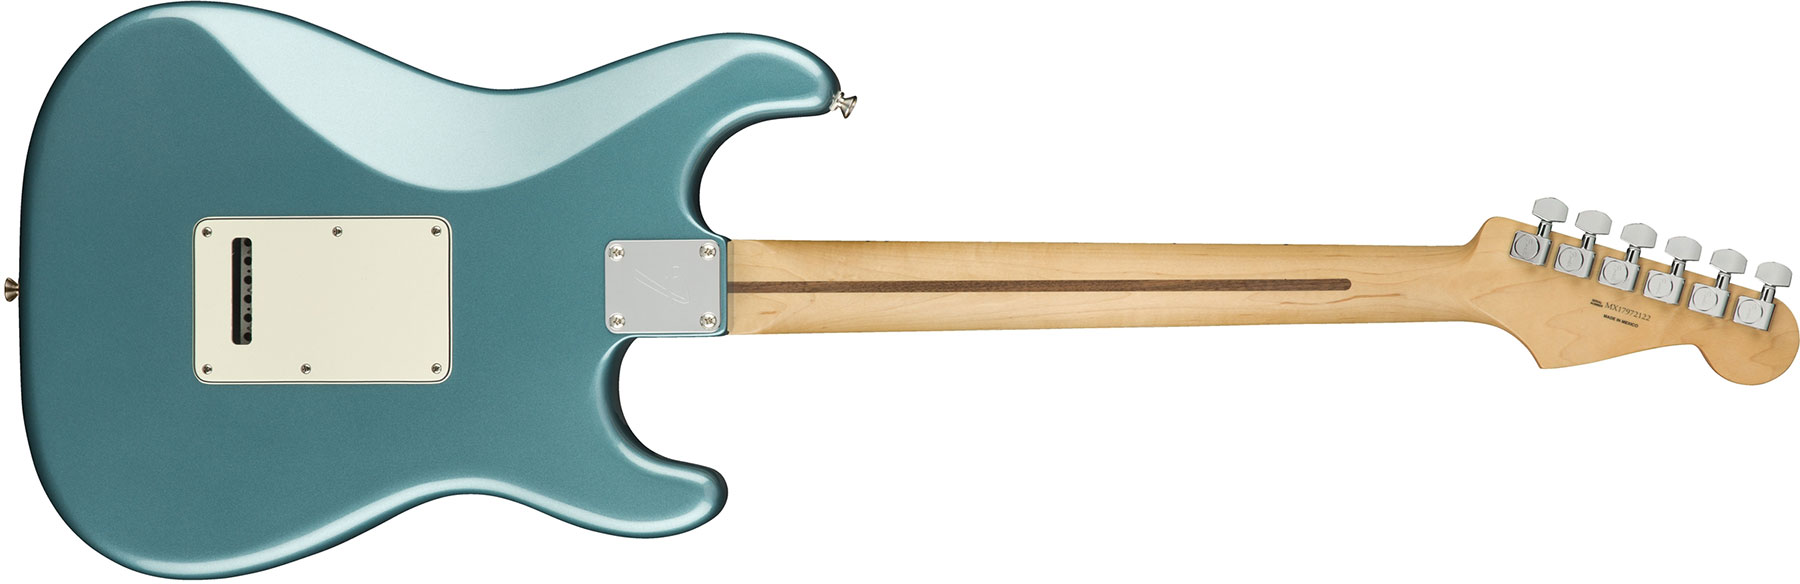 Fender Strat Player Lh Gaucher Mex Sss Mn - Tidepool - Guitare Électrique Gaucher - Variation 1